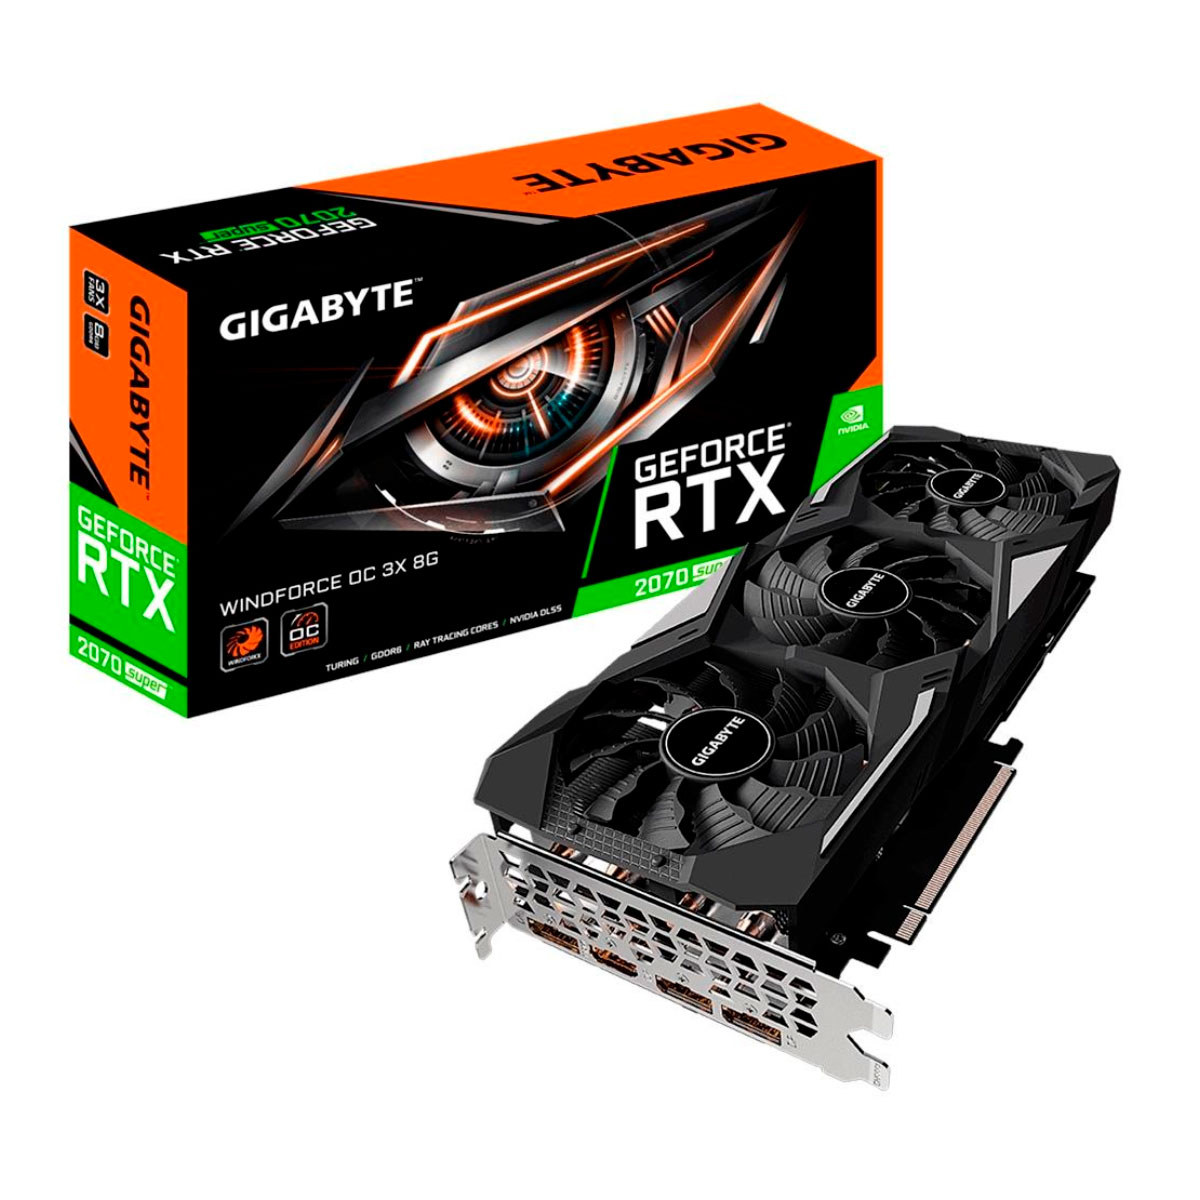 GeForce RTX 2070 Super 8GB GDDR6 256bits - WindForce OC - Gigabyte GV-N207SWF3OC-8GD